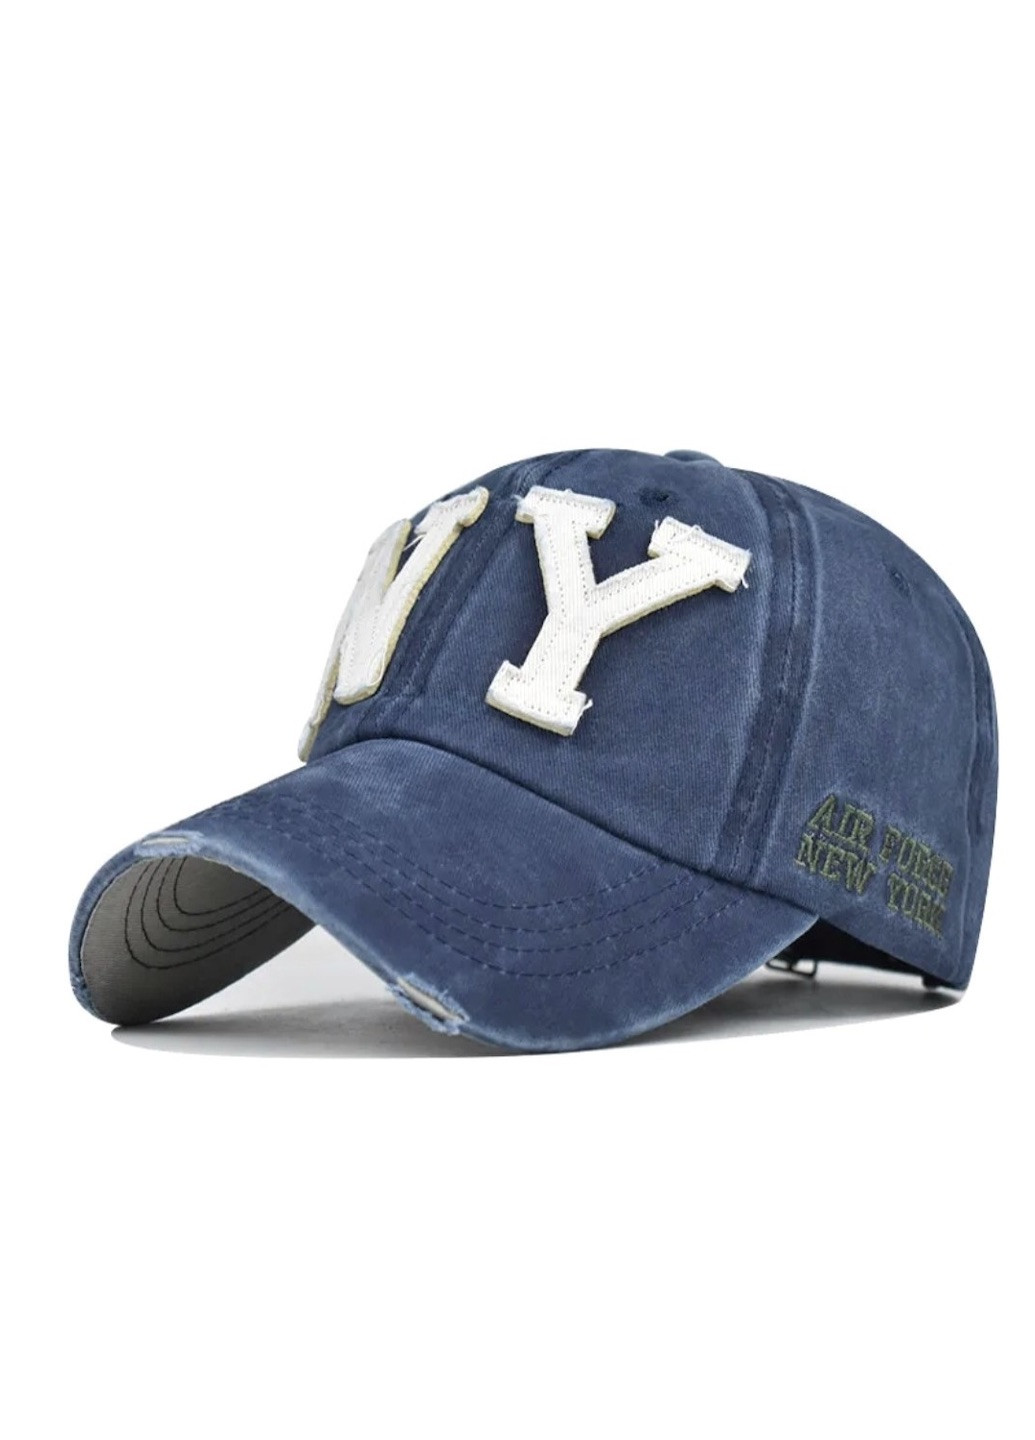 бейсболка Wuke NY air force New York B460 с изогнутым козырьком унисекс one size Хаки Brand кепка (258629212)